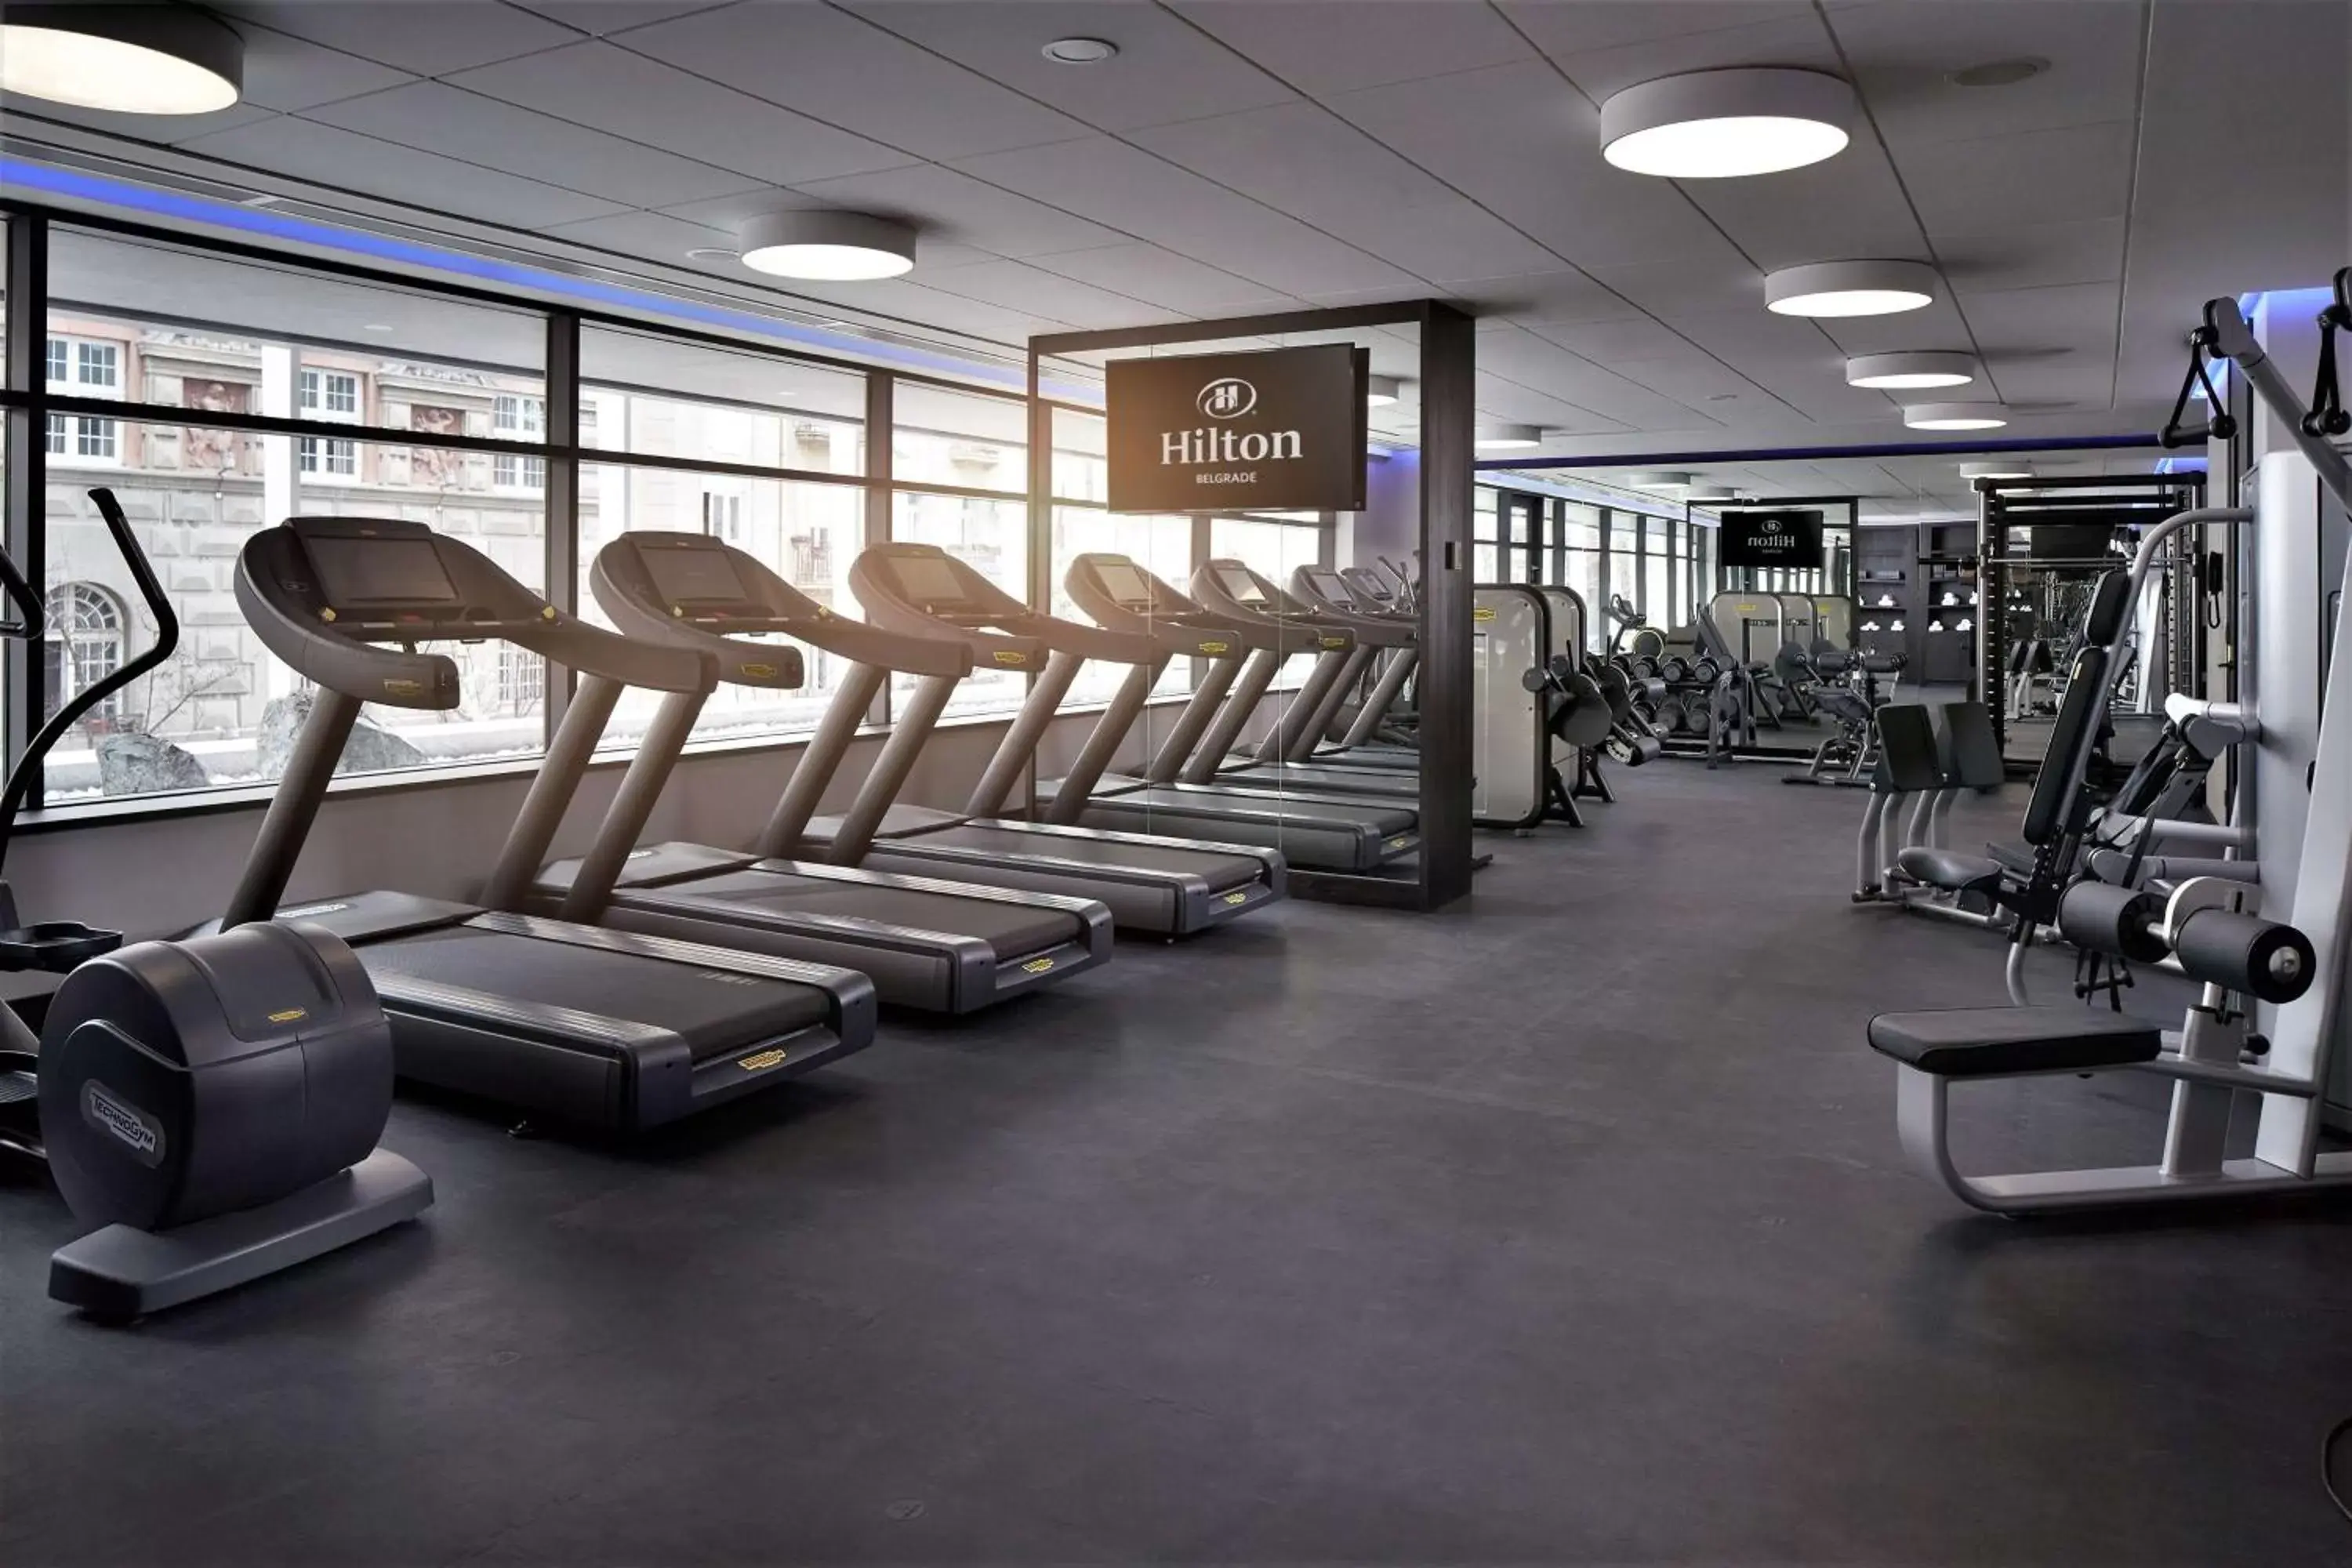 Fitness centre/facilities, Fitness Center/Facilities in Hilton Belgrade